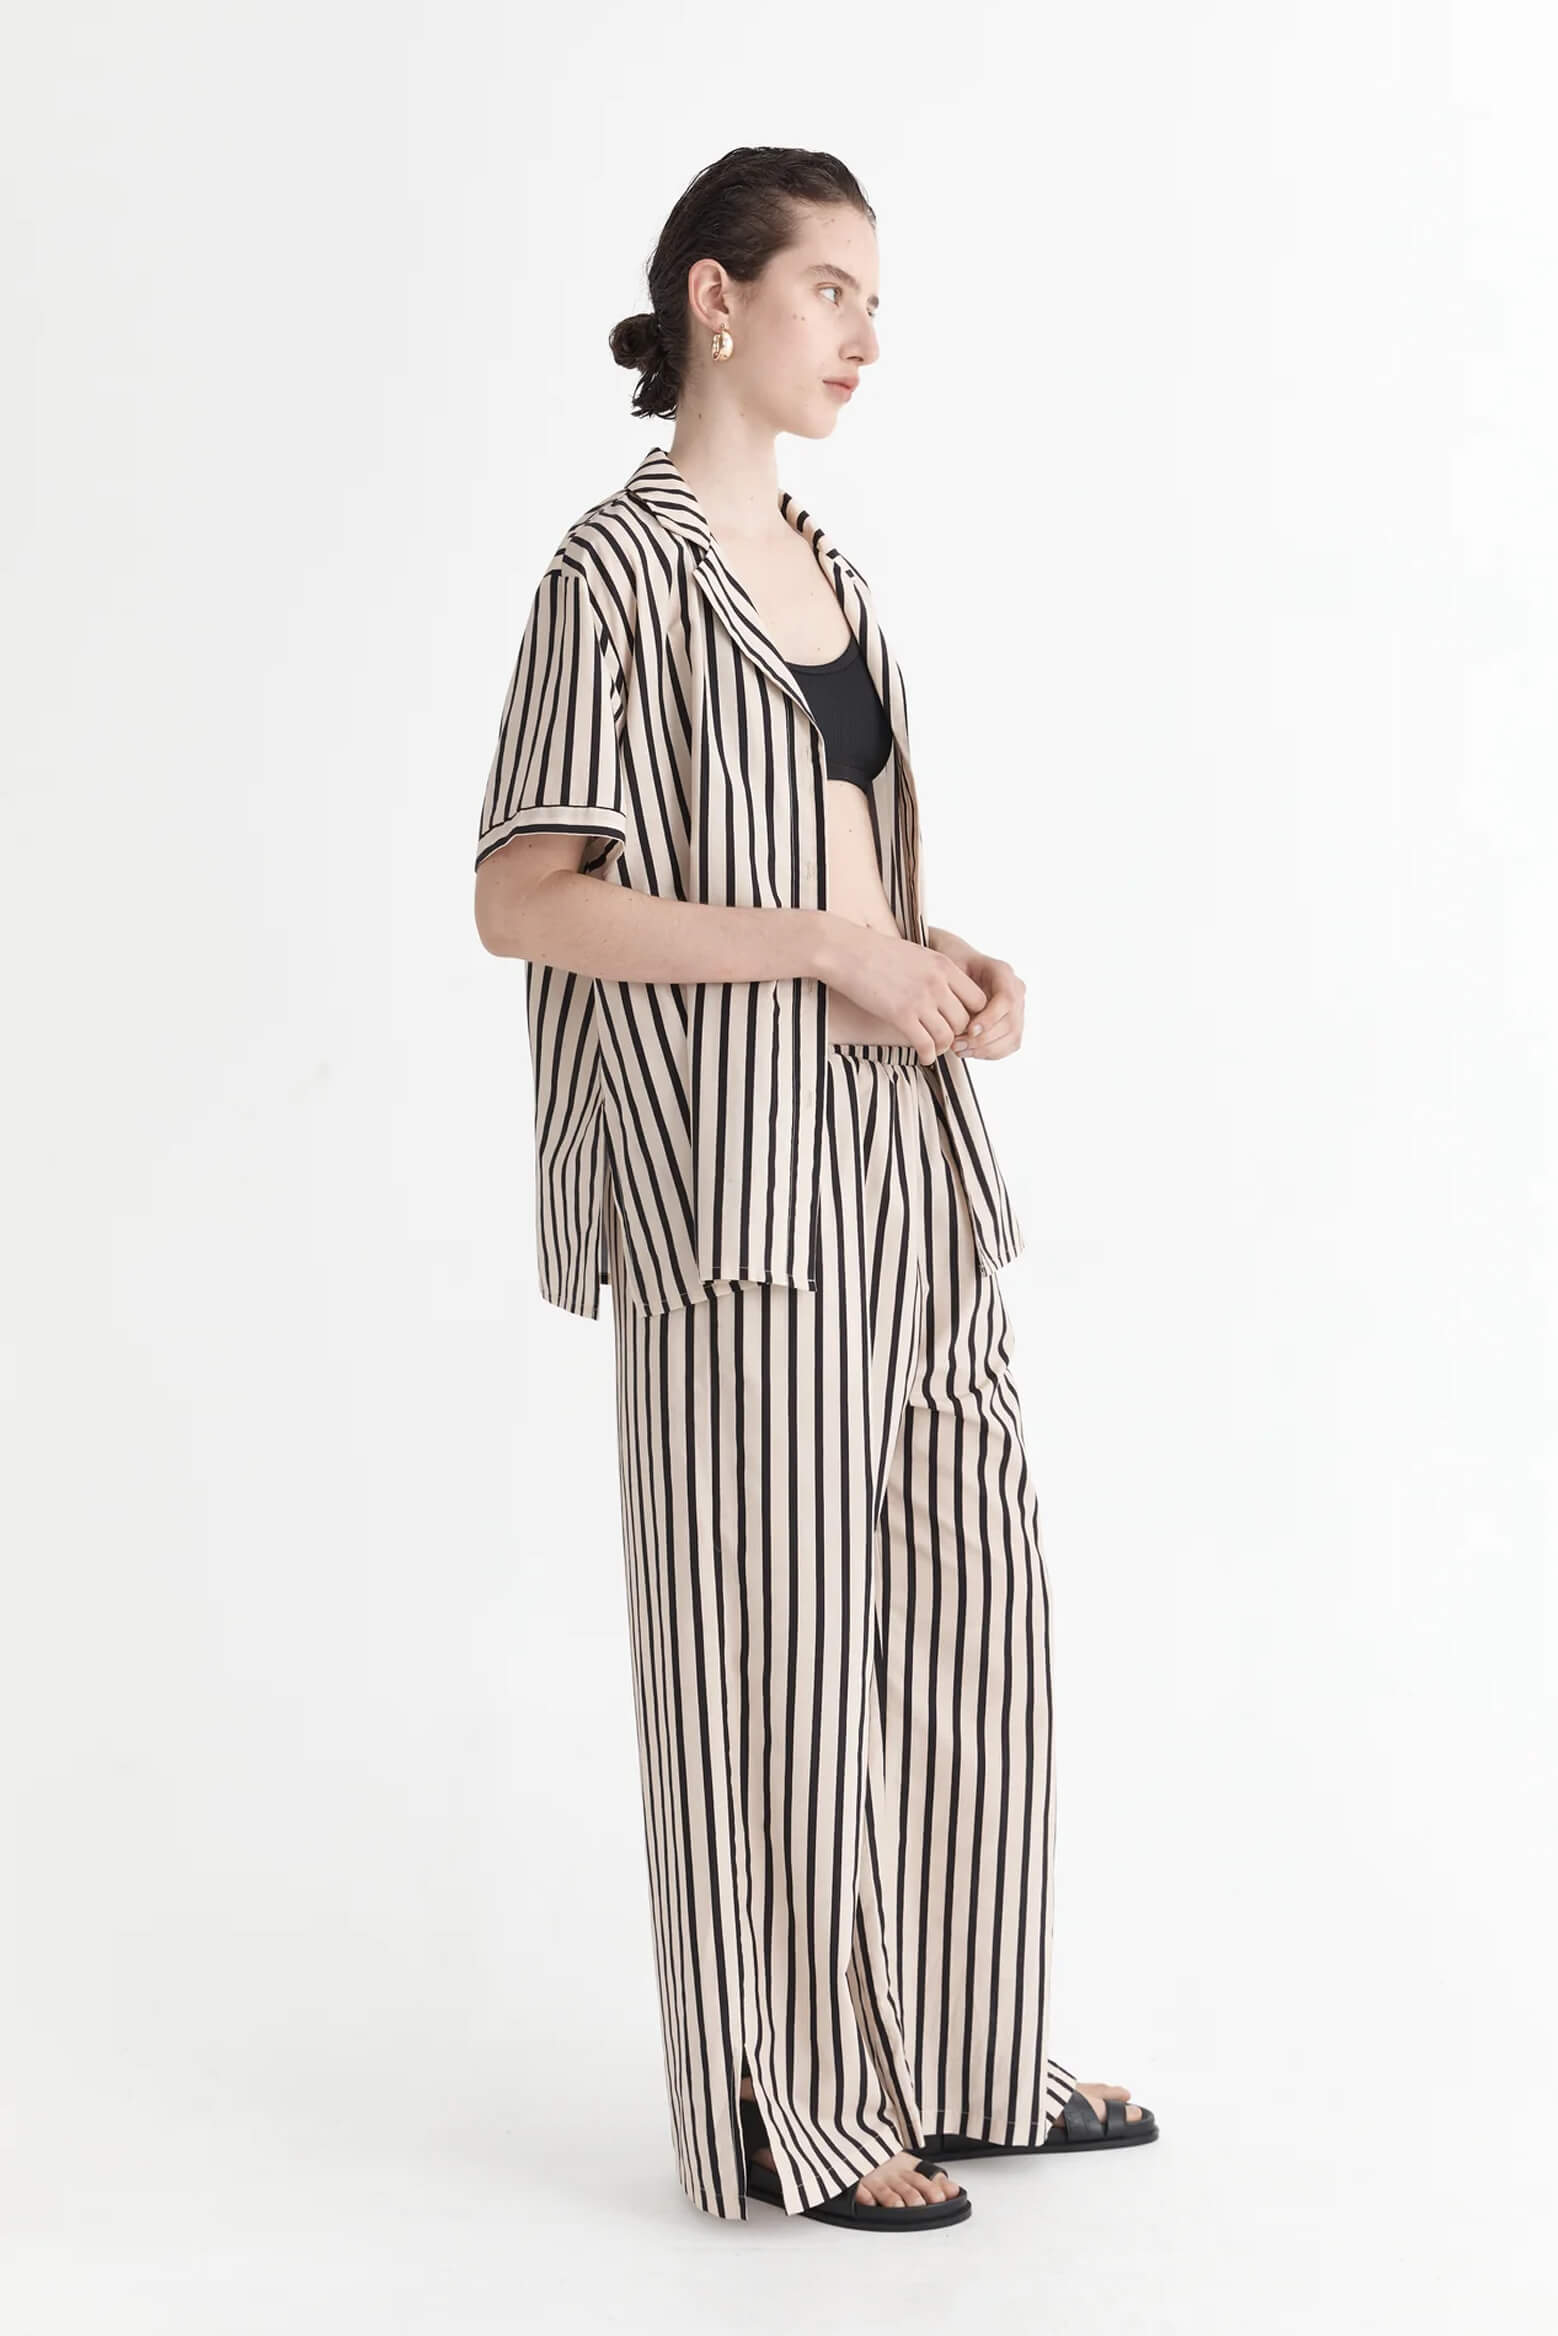 Solaqua The Giulia Pant in Classico Stripe available at The New Trend Australia.